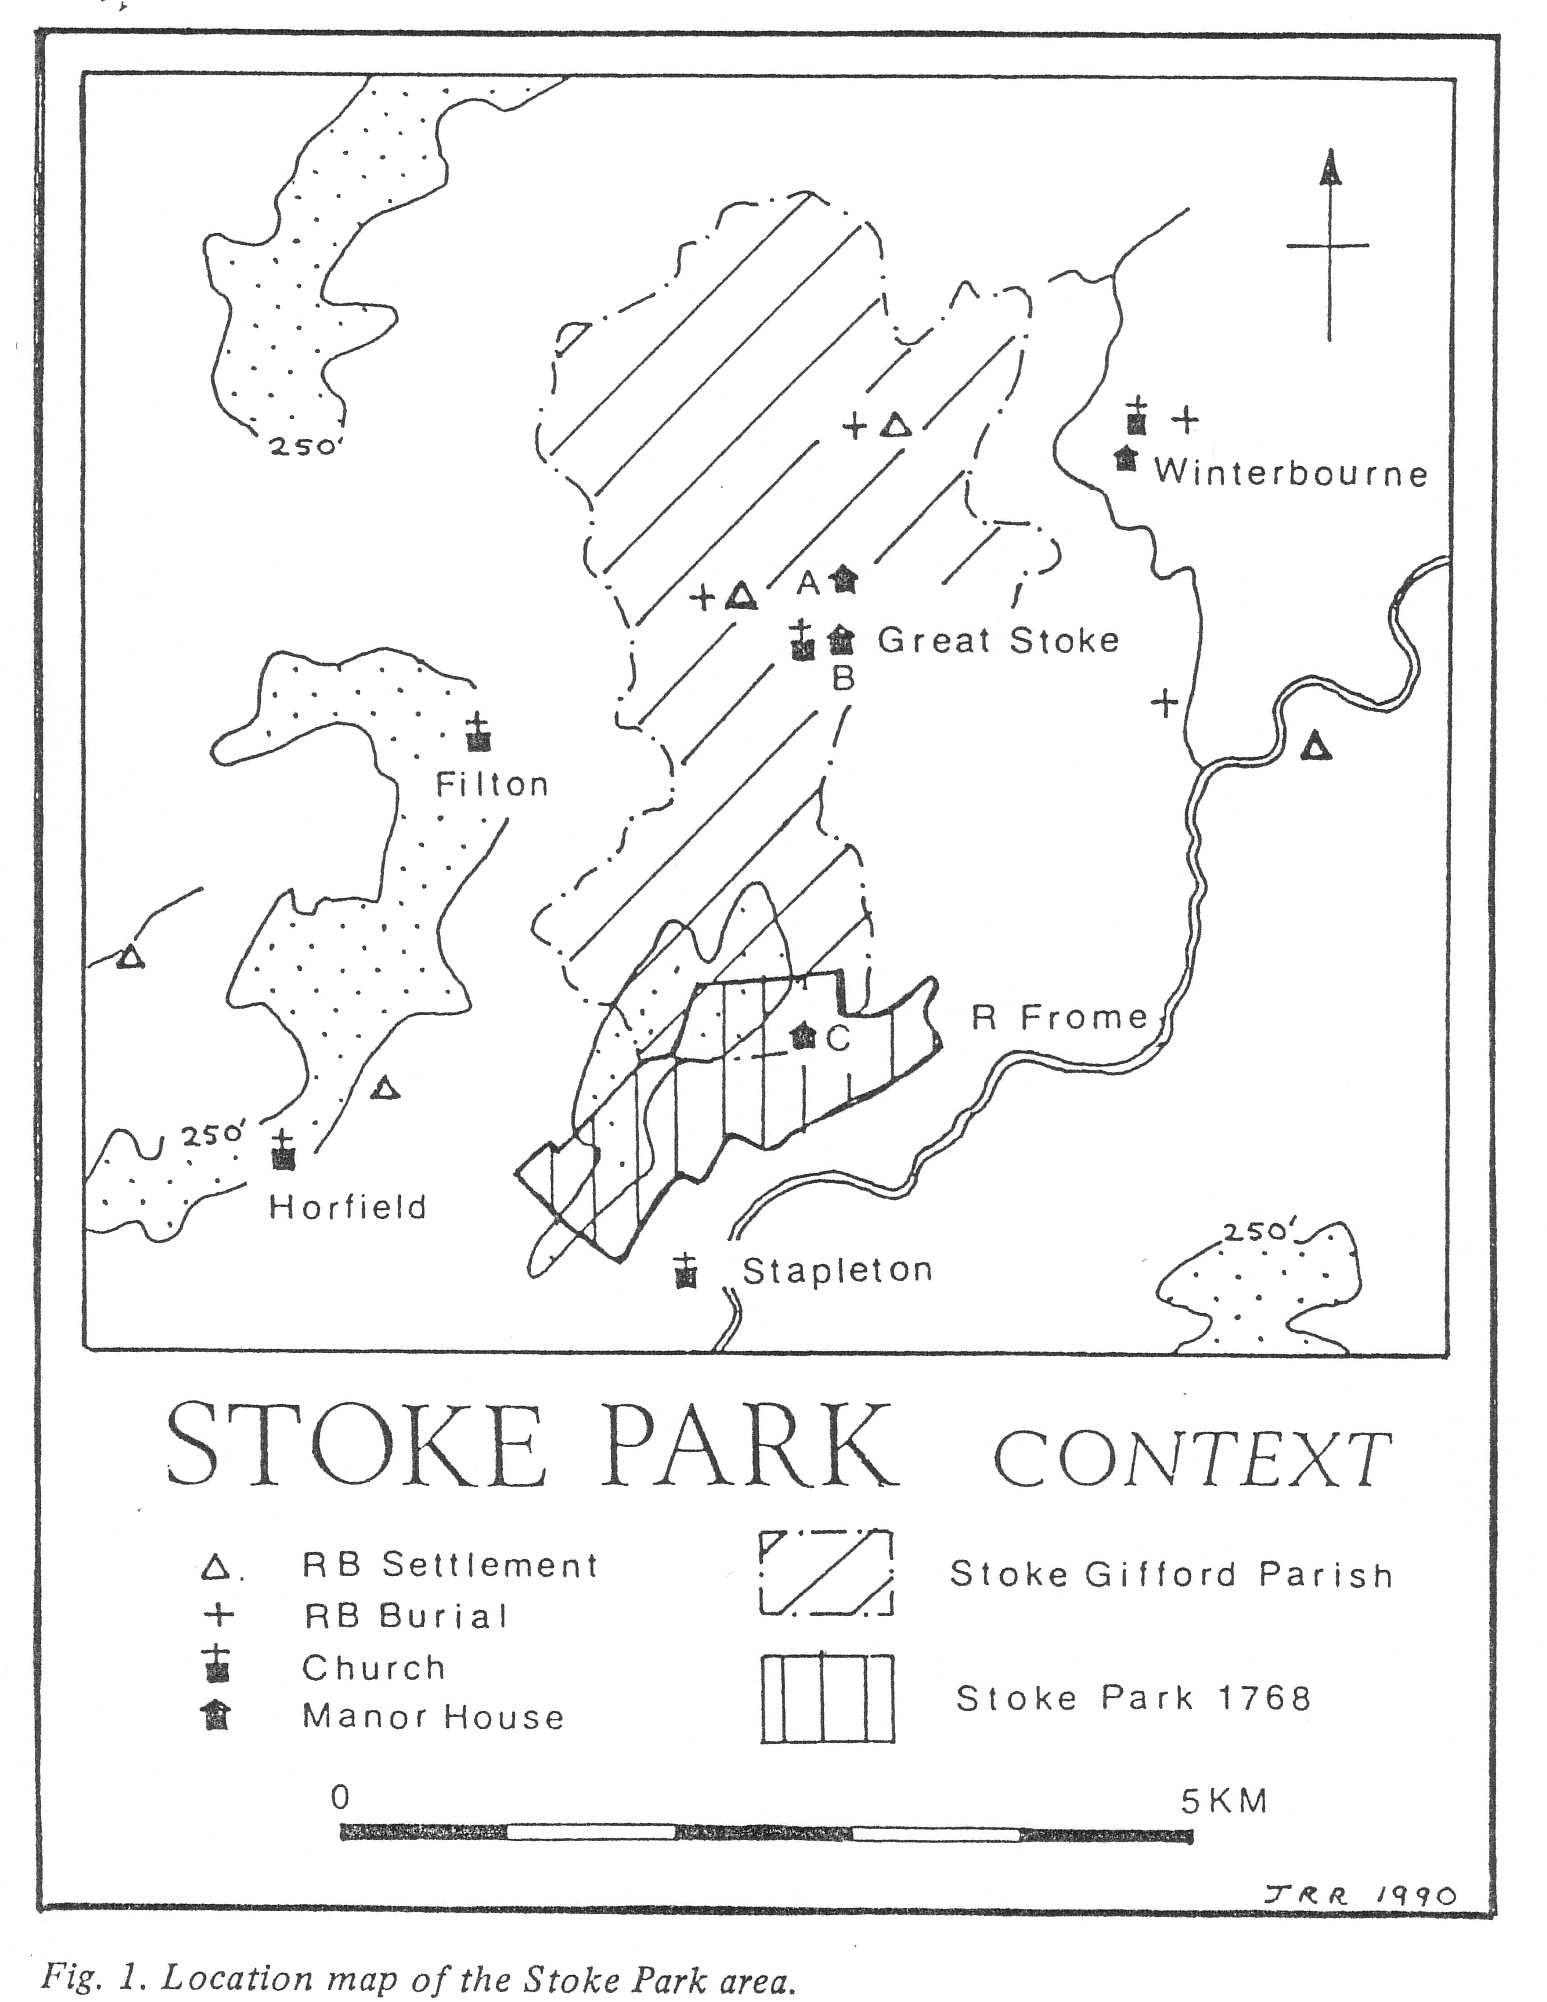 Stoke Park Context Map